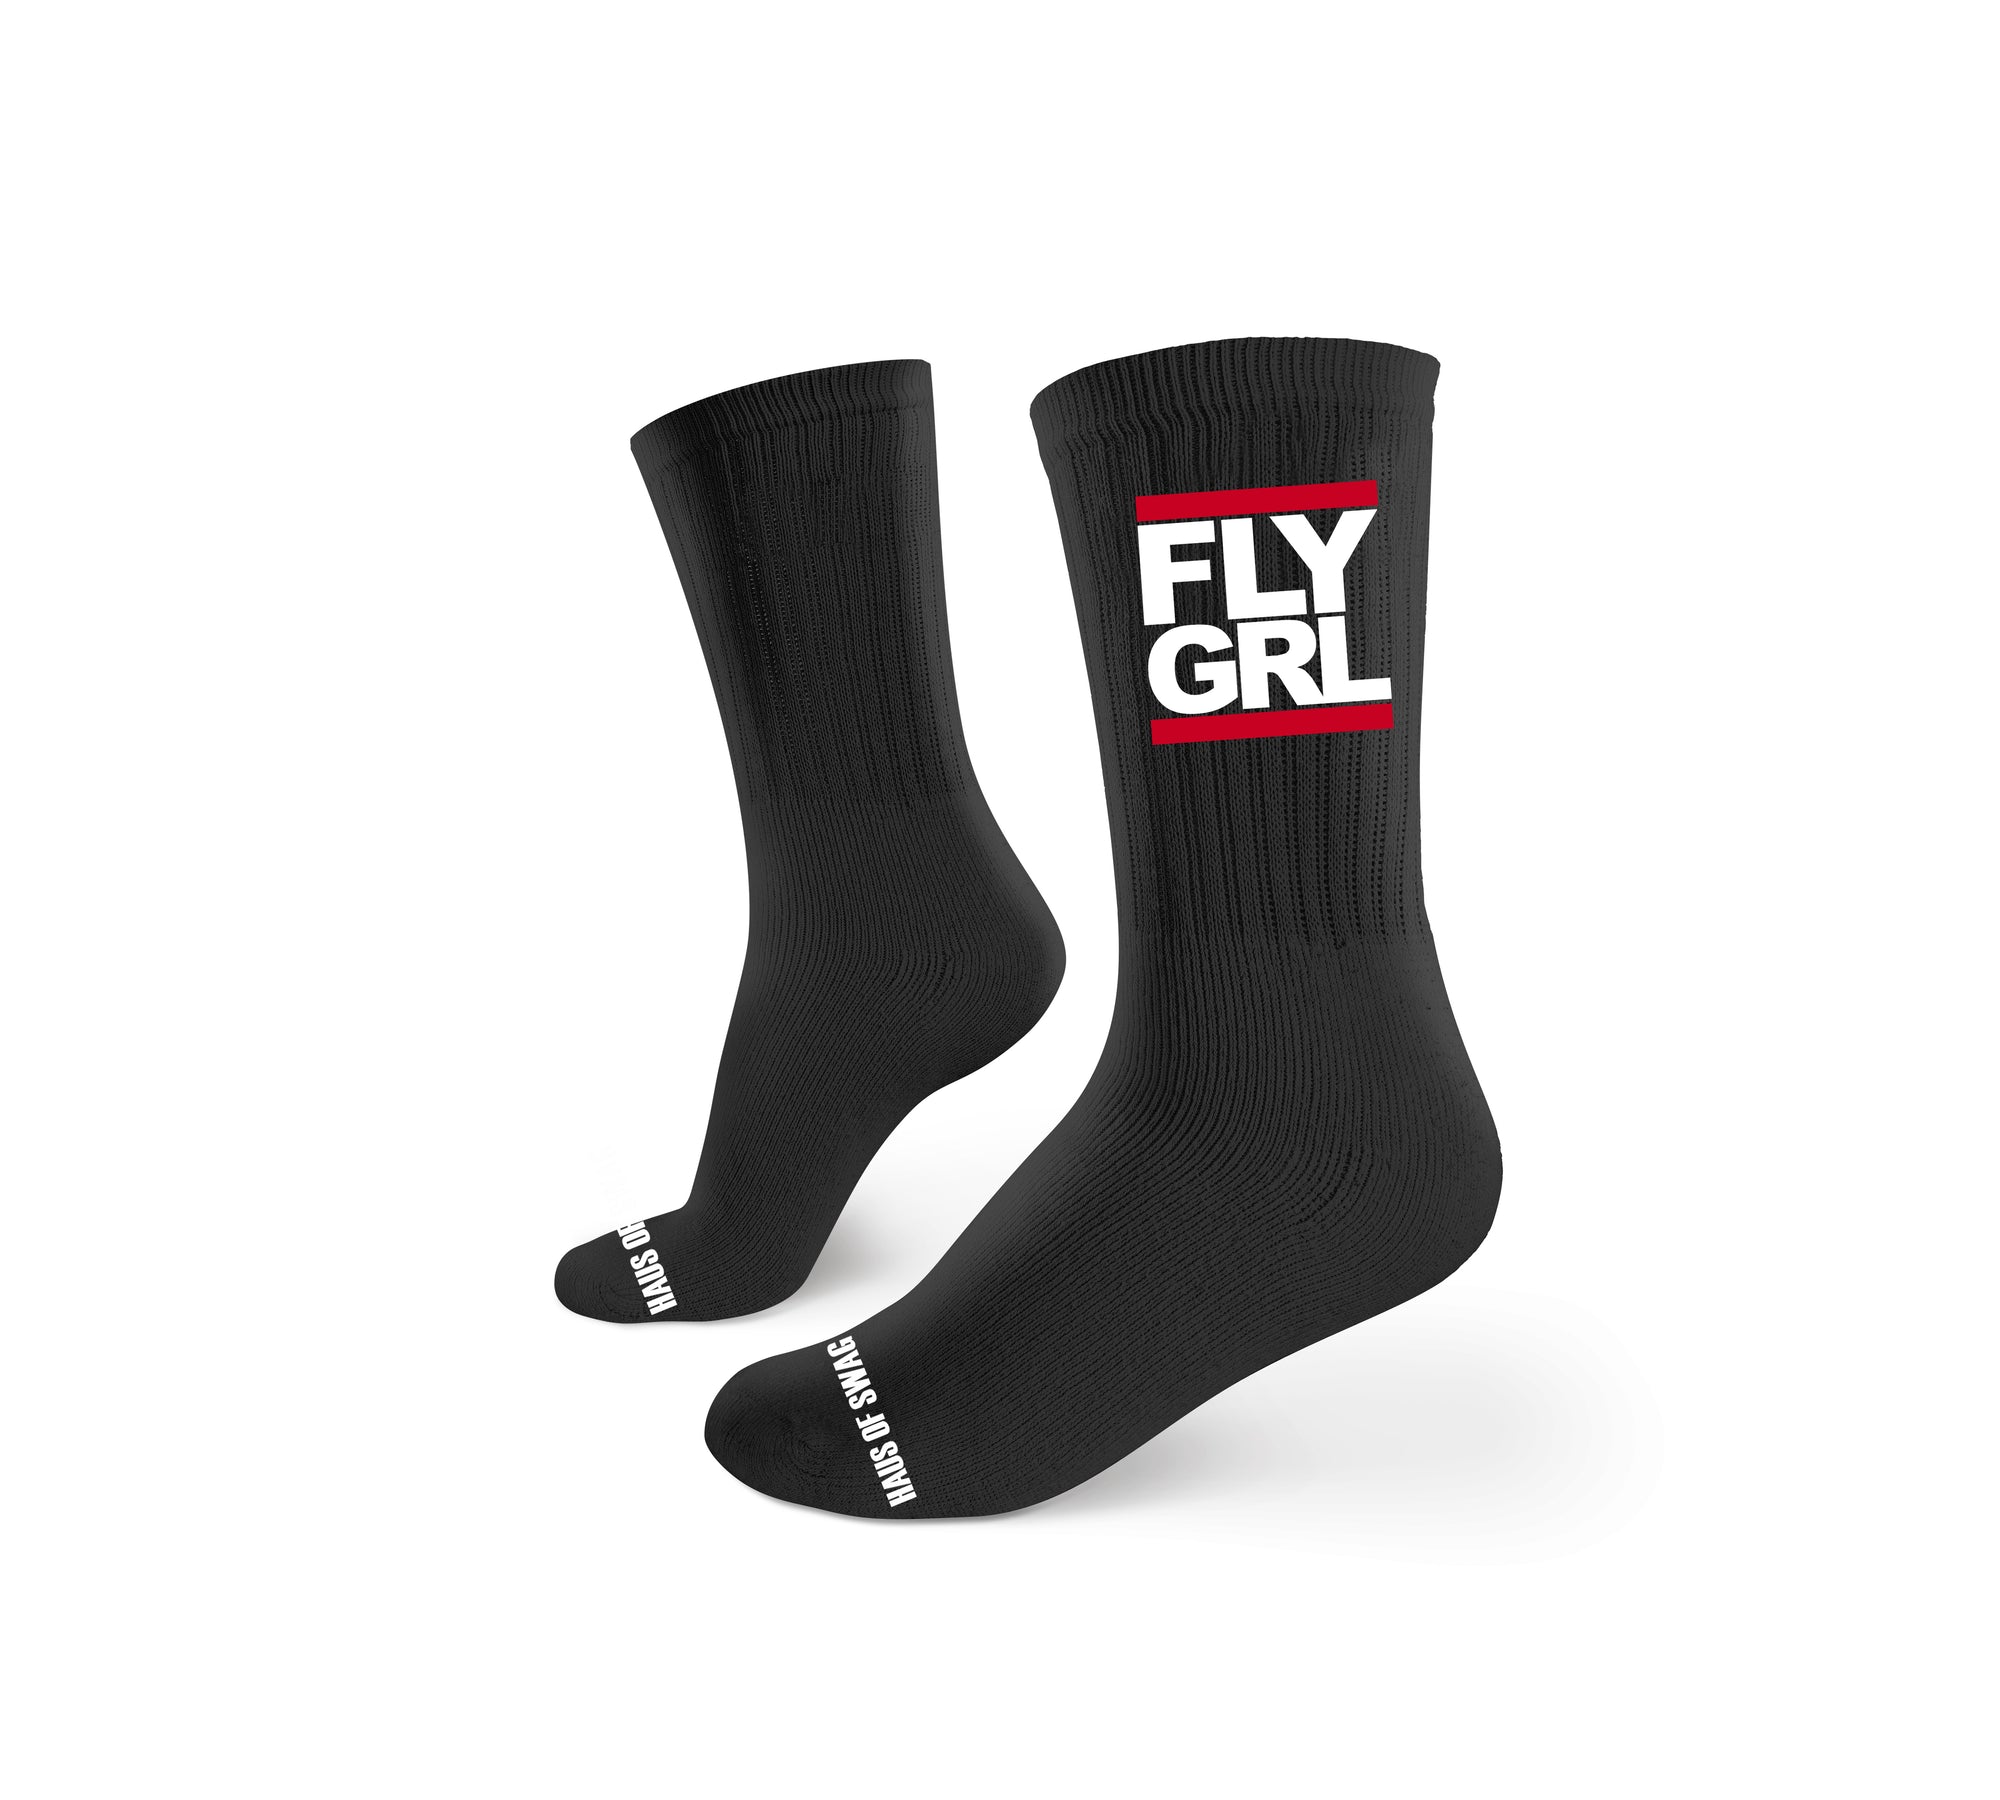 FLY GRL Black Socks